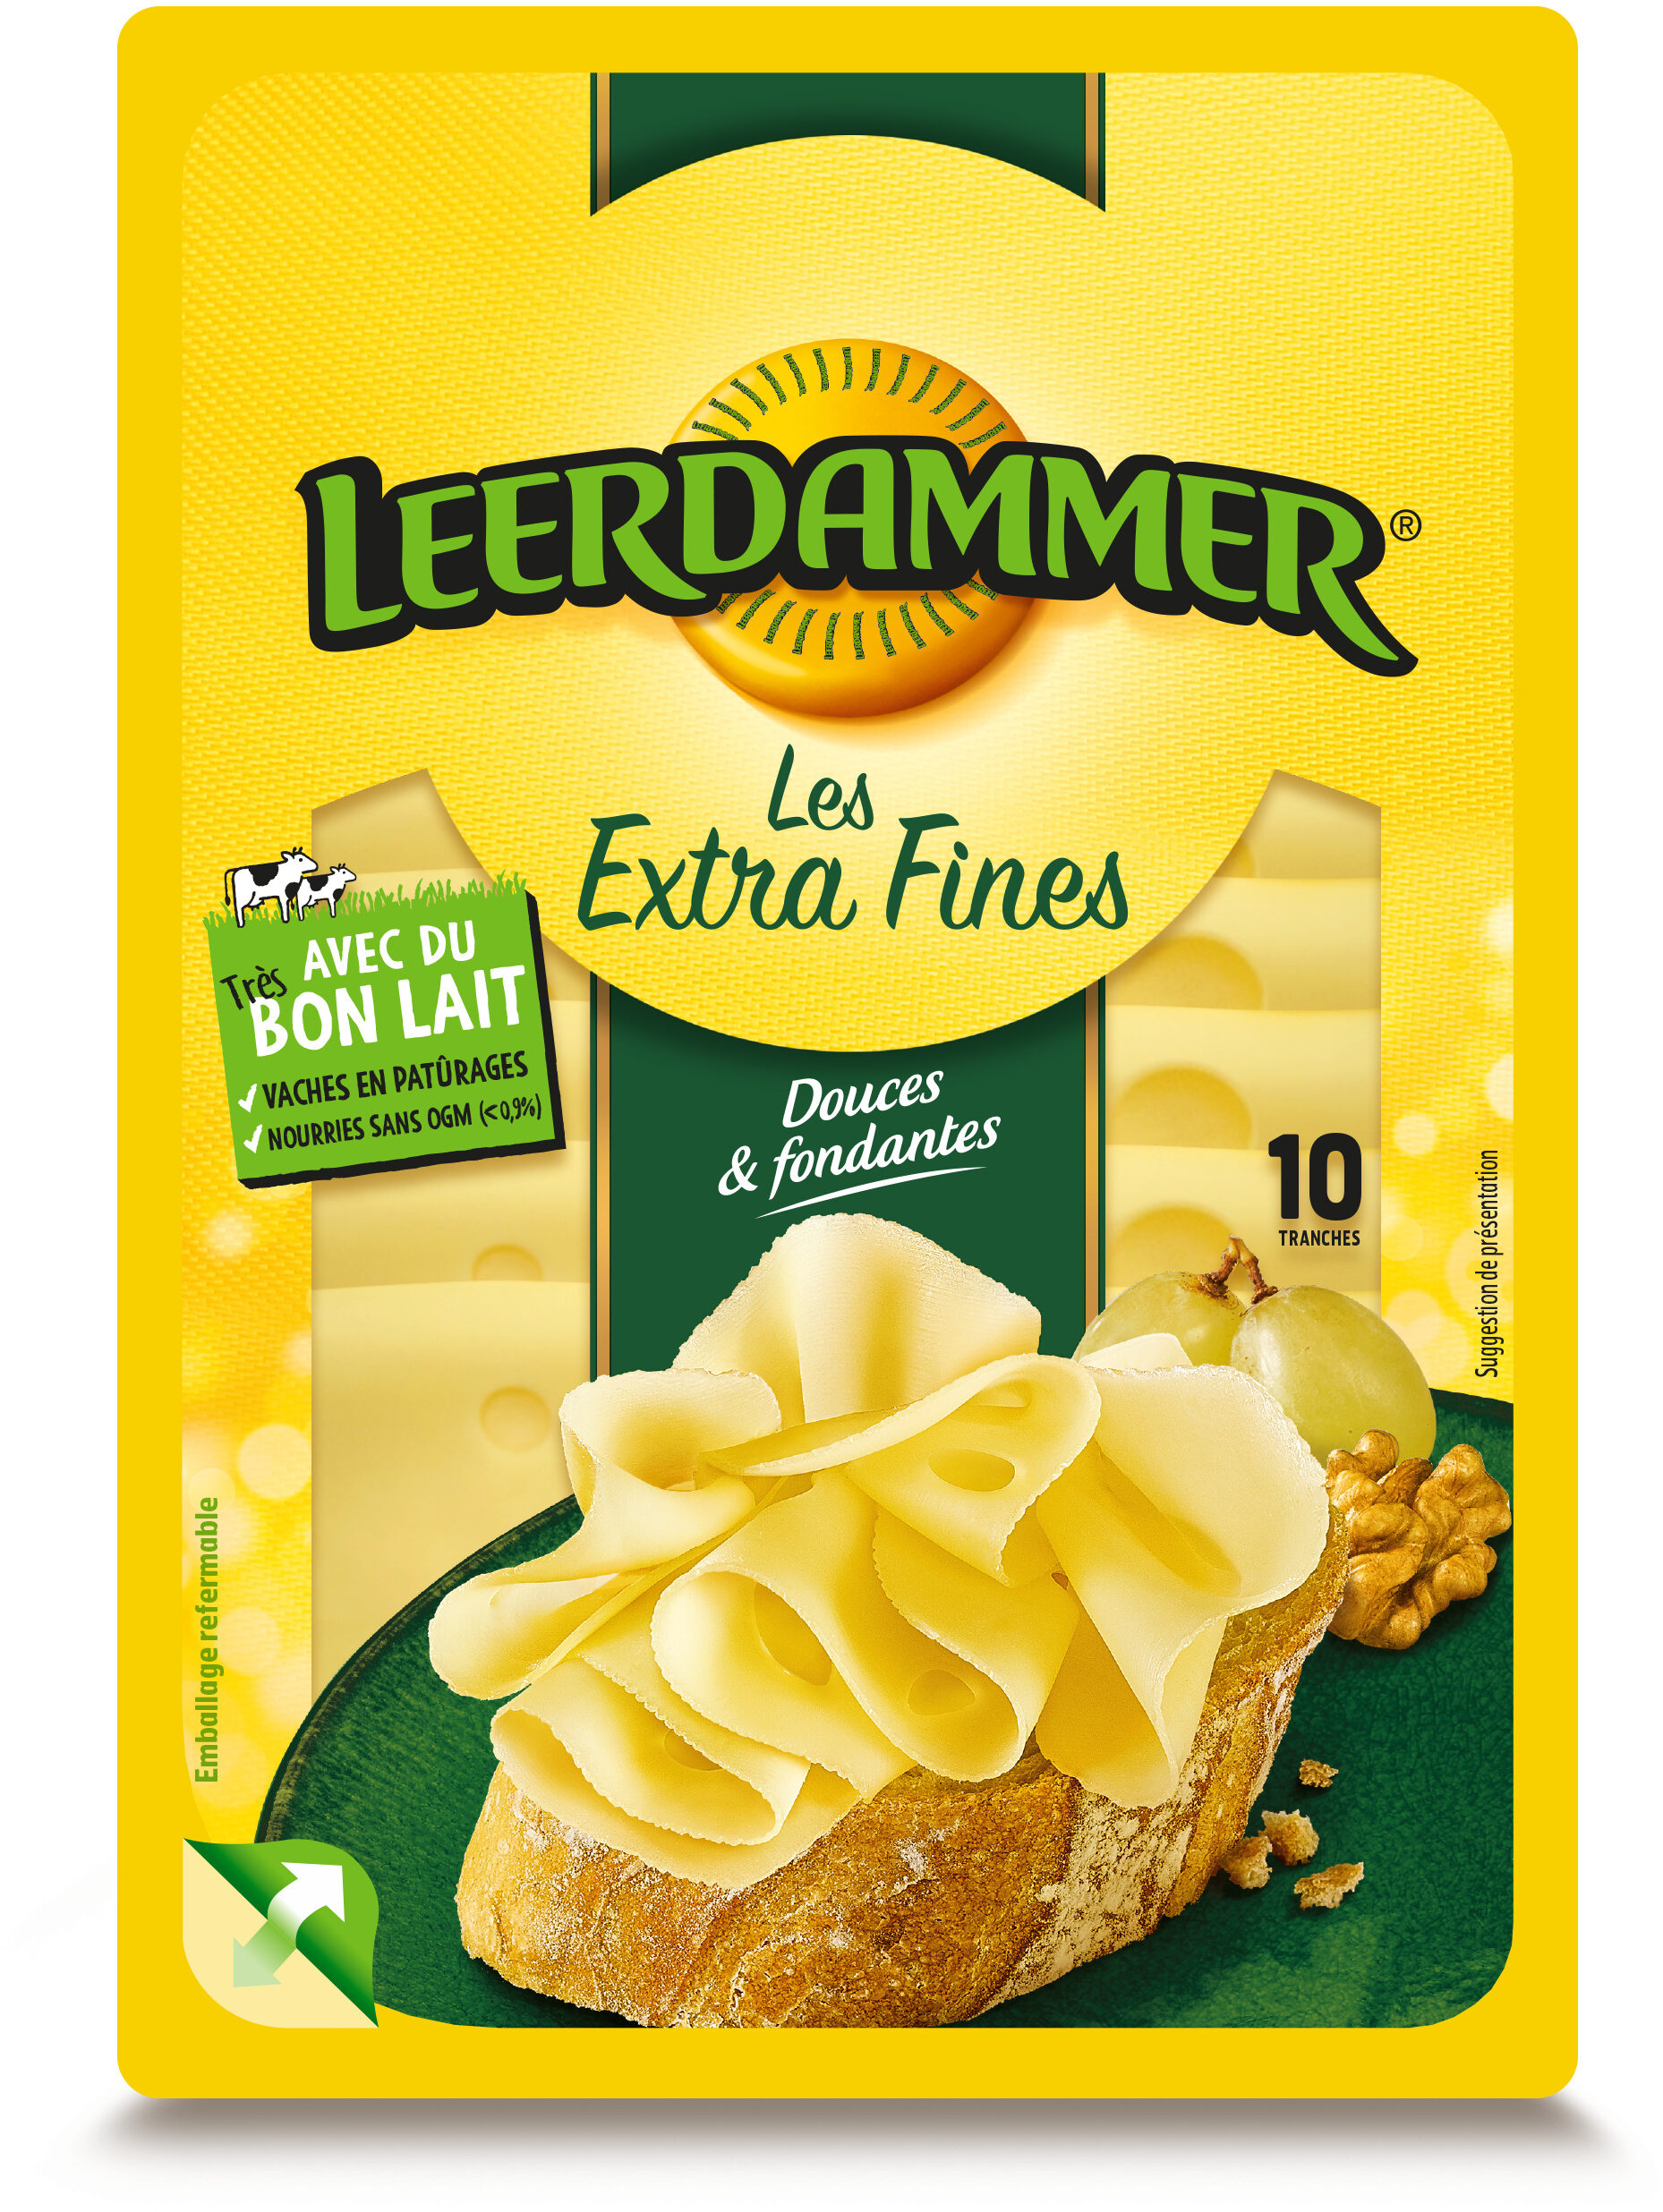 Leerdammer Extra Fines Originales douces et fondantes 10 tranches - Product - fr